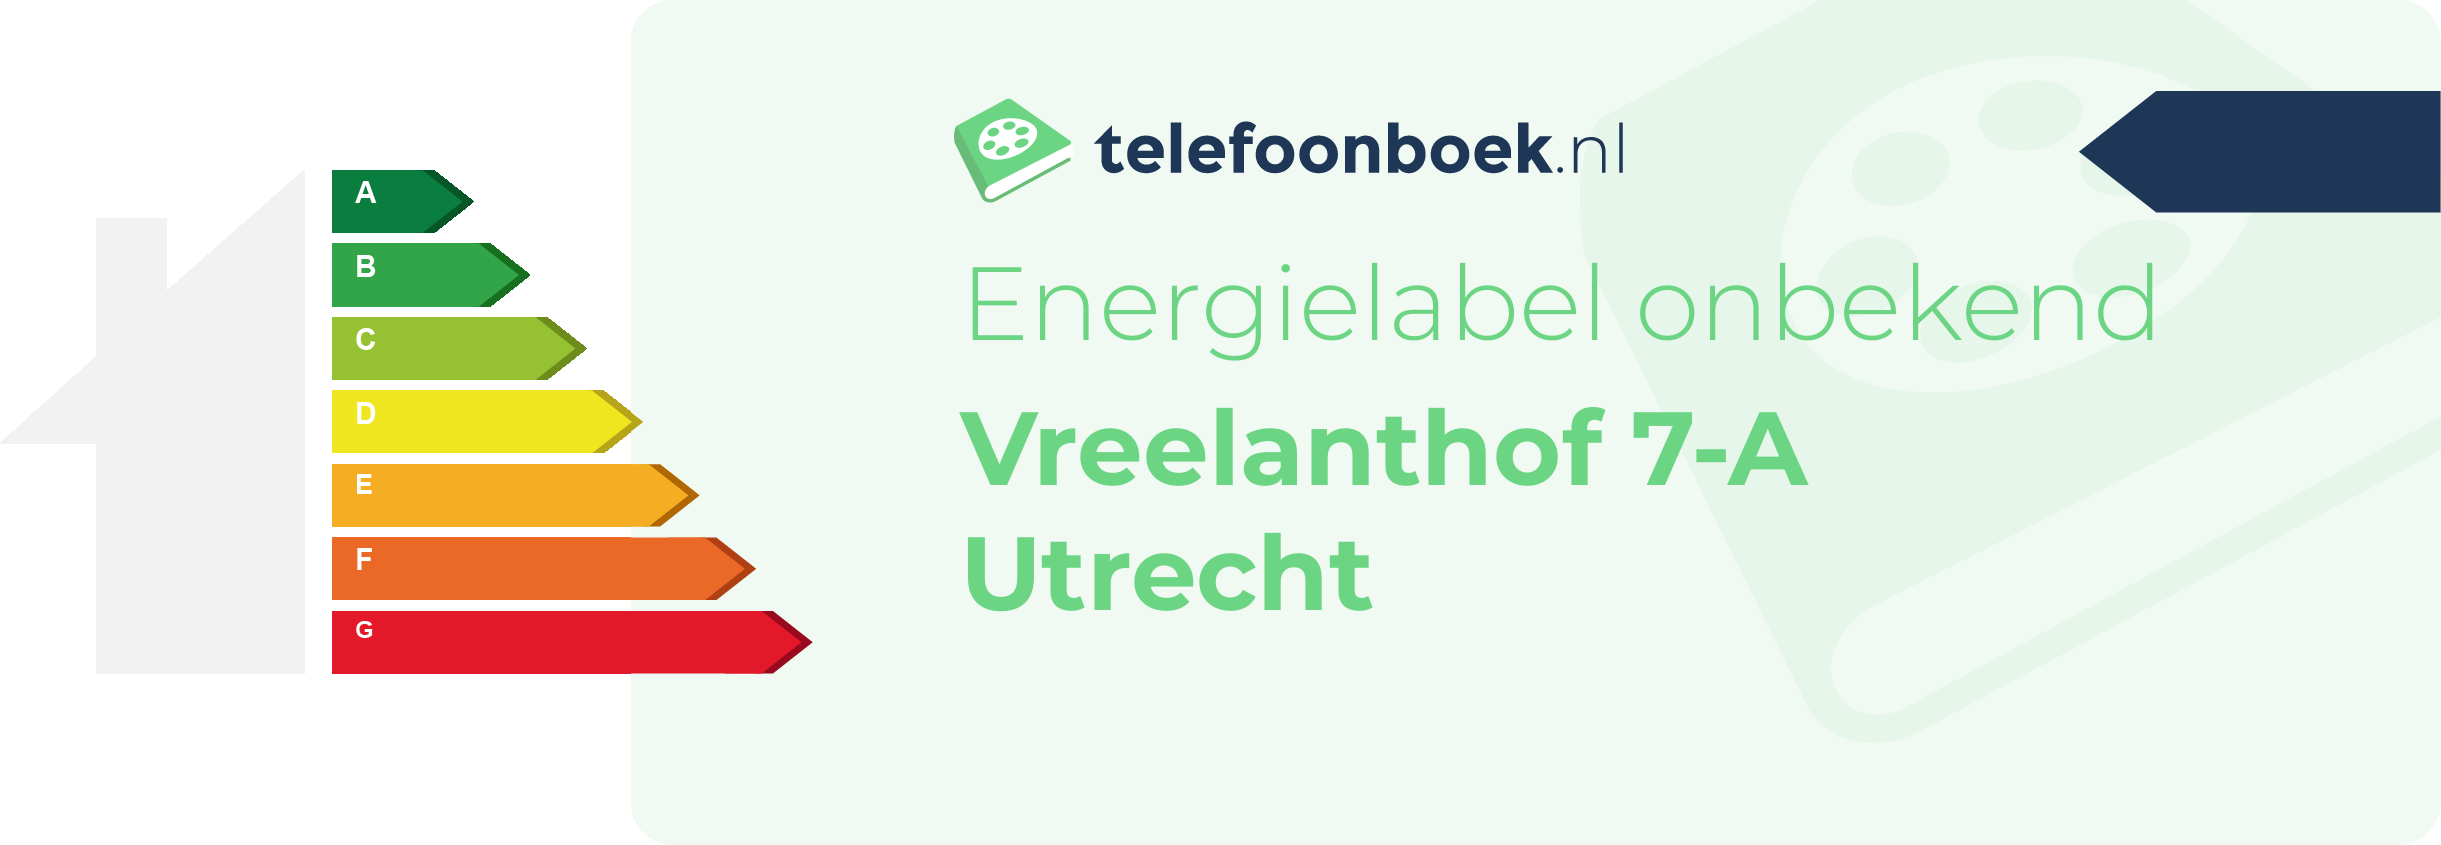 Energielabel Vreelanthof 7-A Utrecht